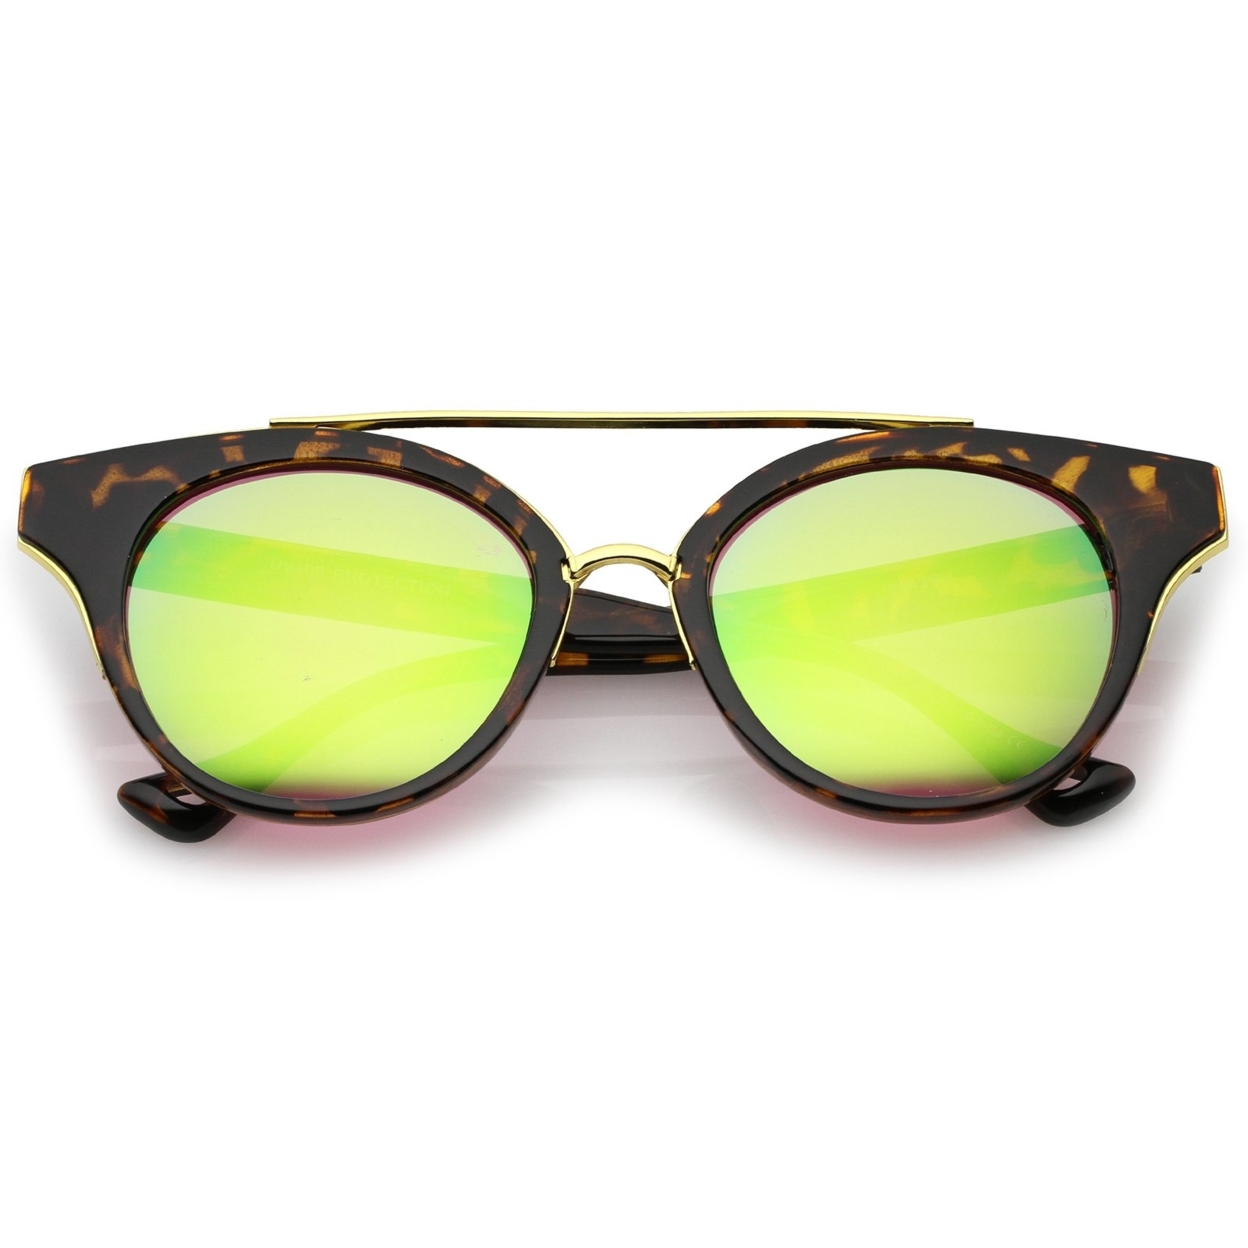 Double Nose Bridge Round Colored Mirror Lens Cat Eye Sunglasses 51mm - Black-Gold / Silver Mirror